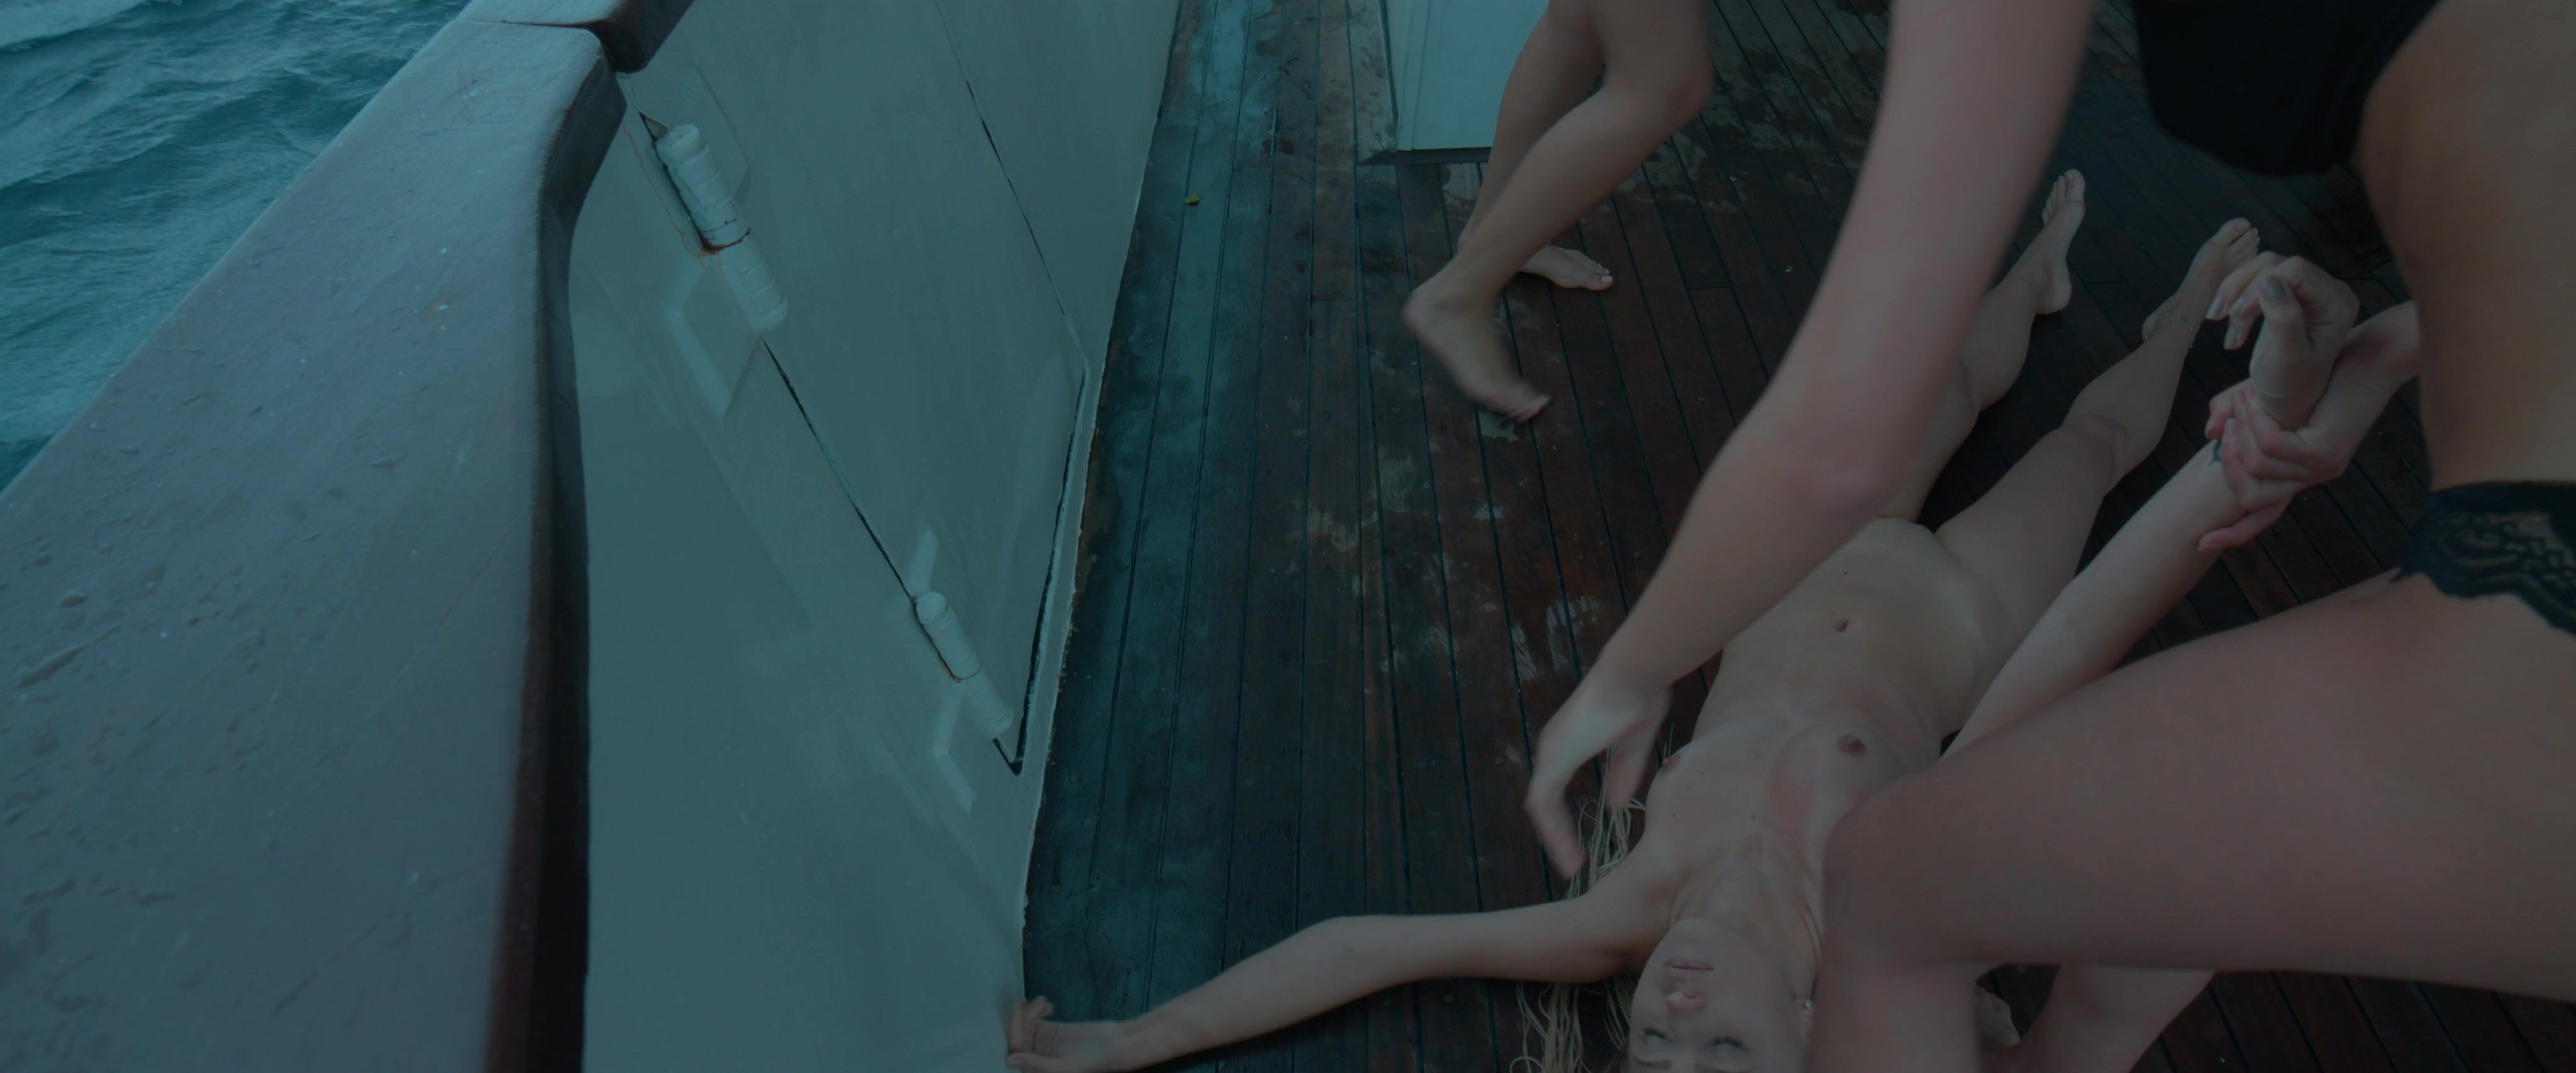 Chick Nude Art Movie - Hallway (Best Erotic Music) Double